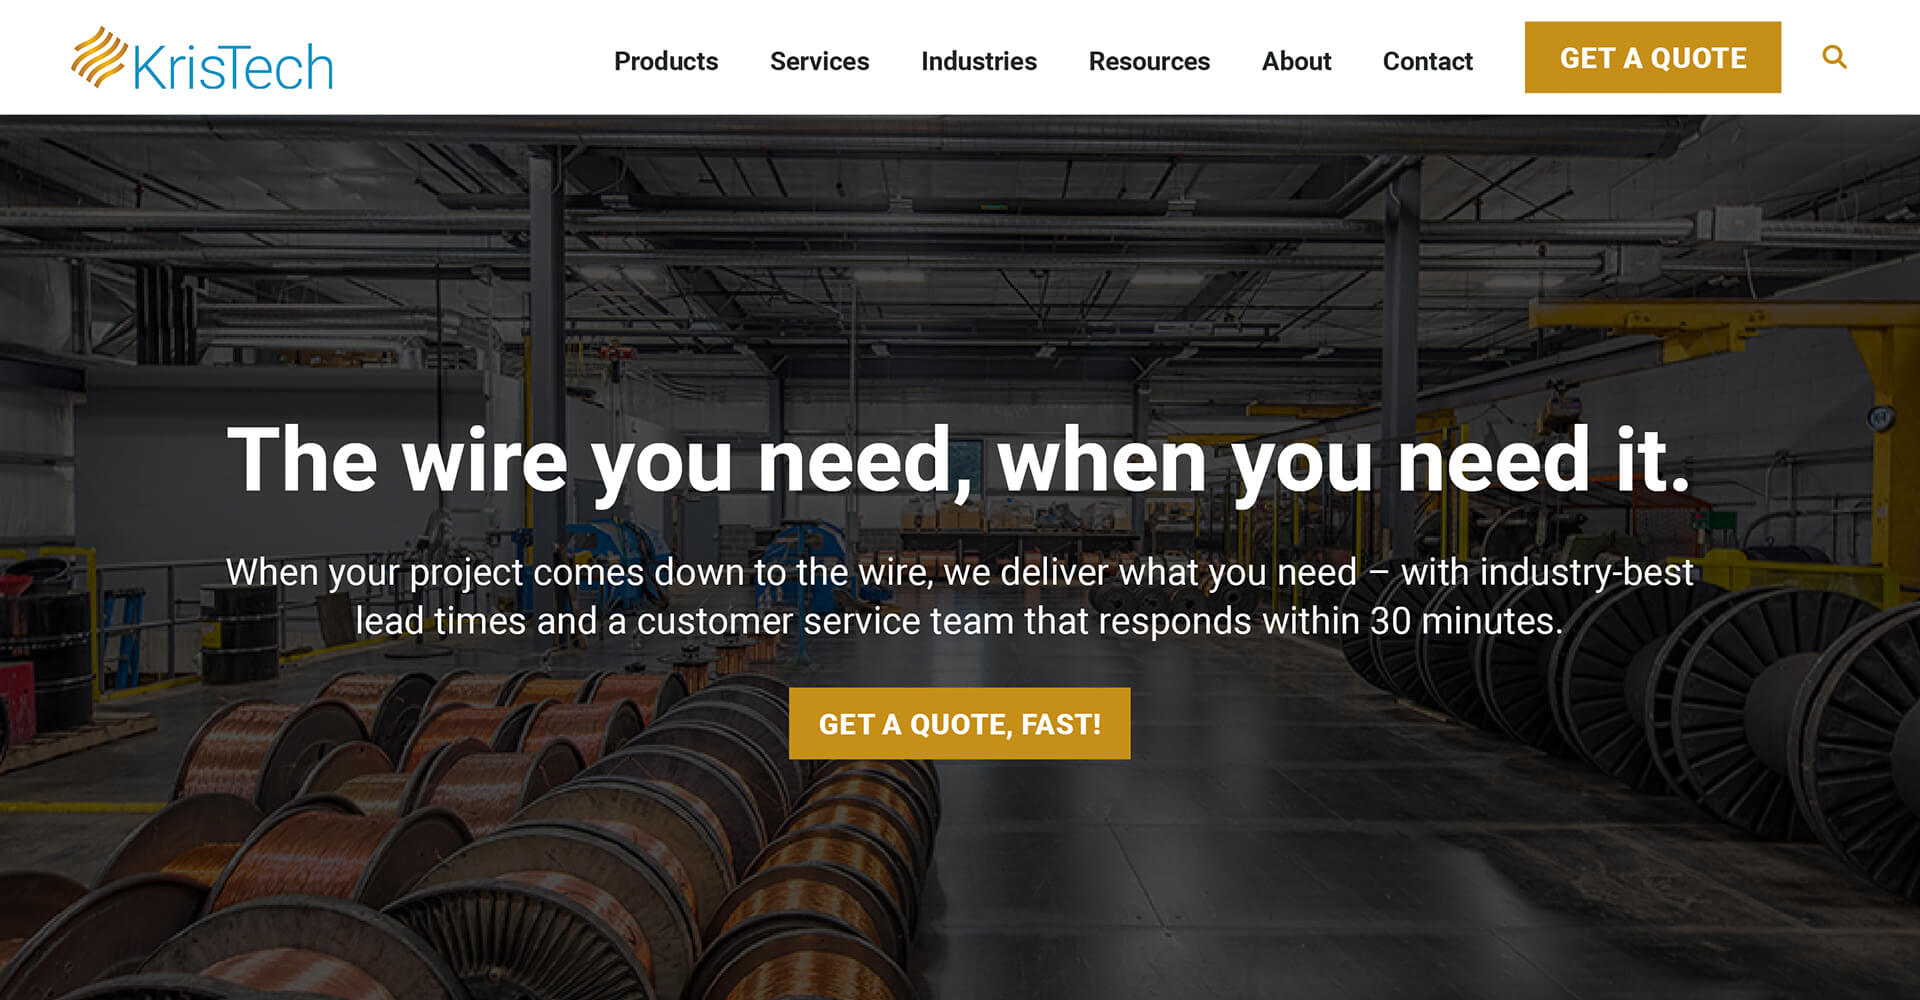 Homepage screenshot of Kris-Tech Wire